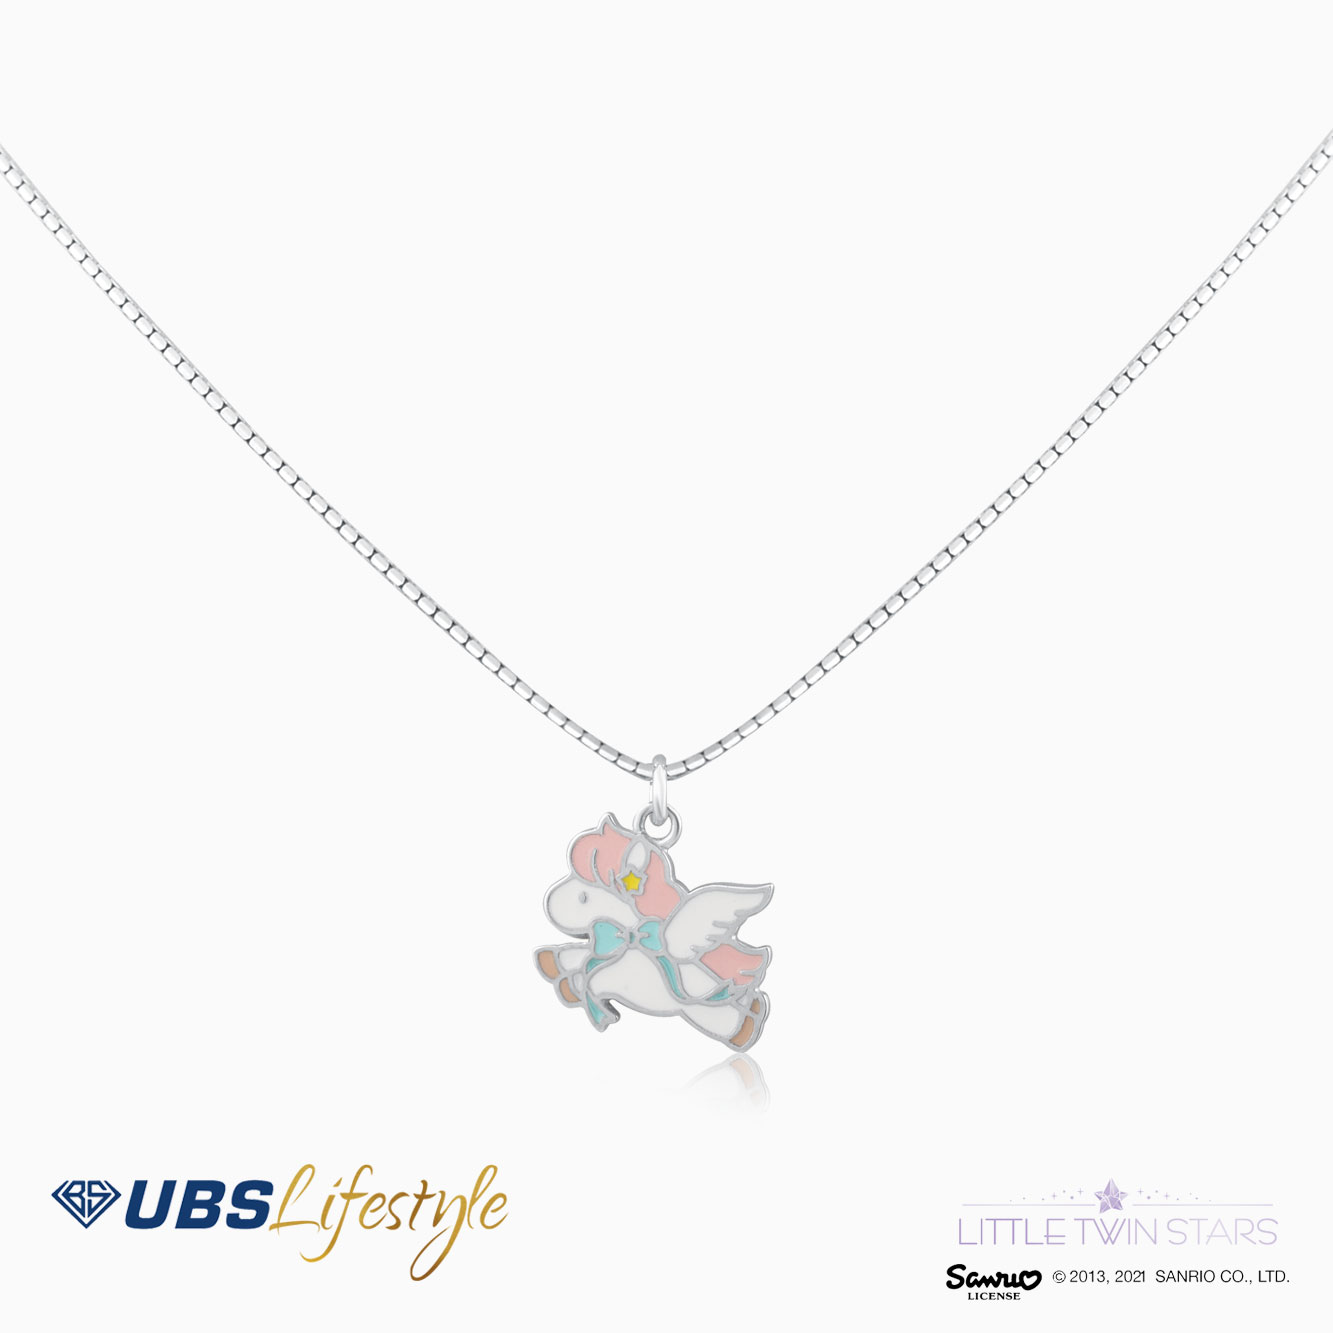 UBS Kalung Emas Anak Sanrio Little Twin Star - Kkz0063 - 17K